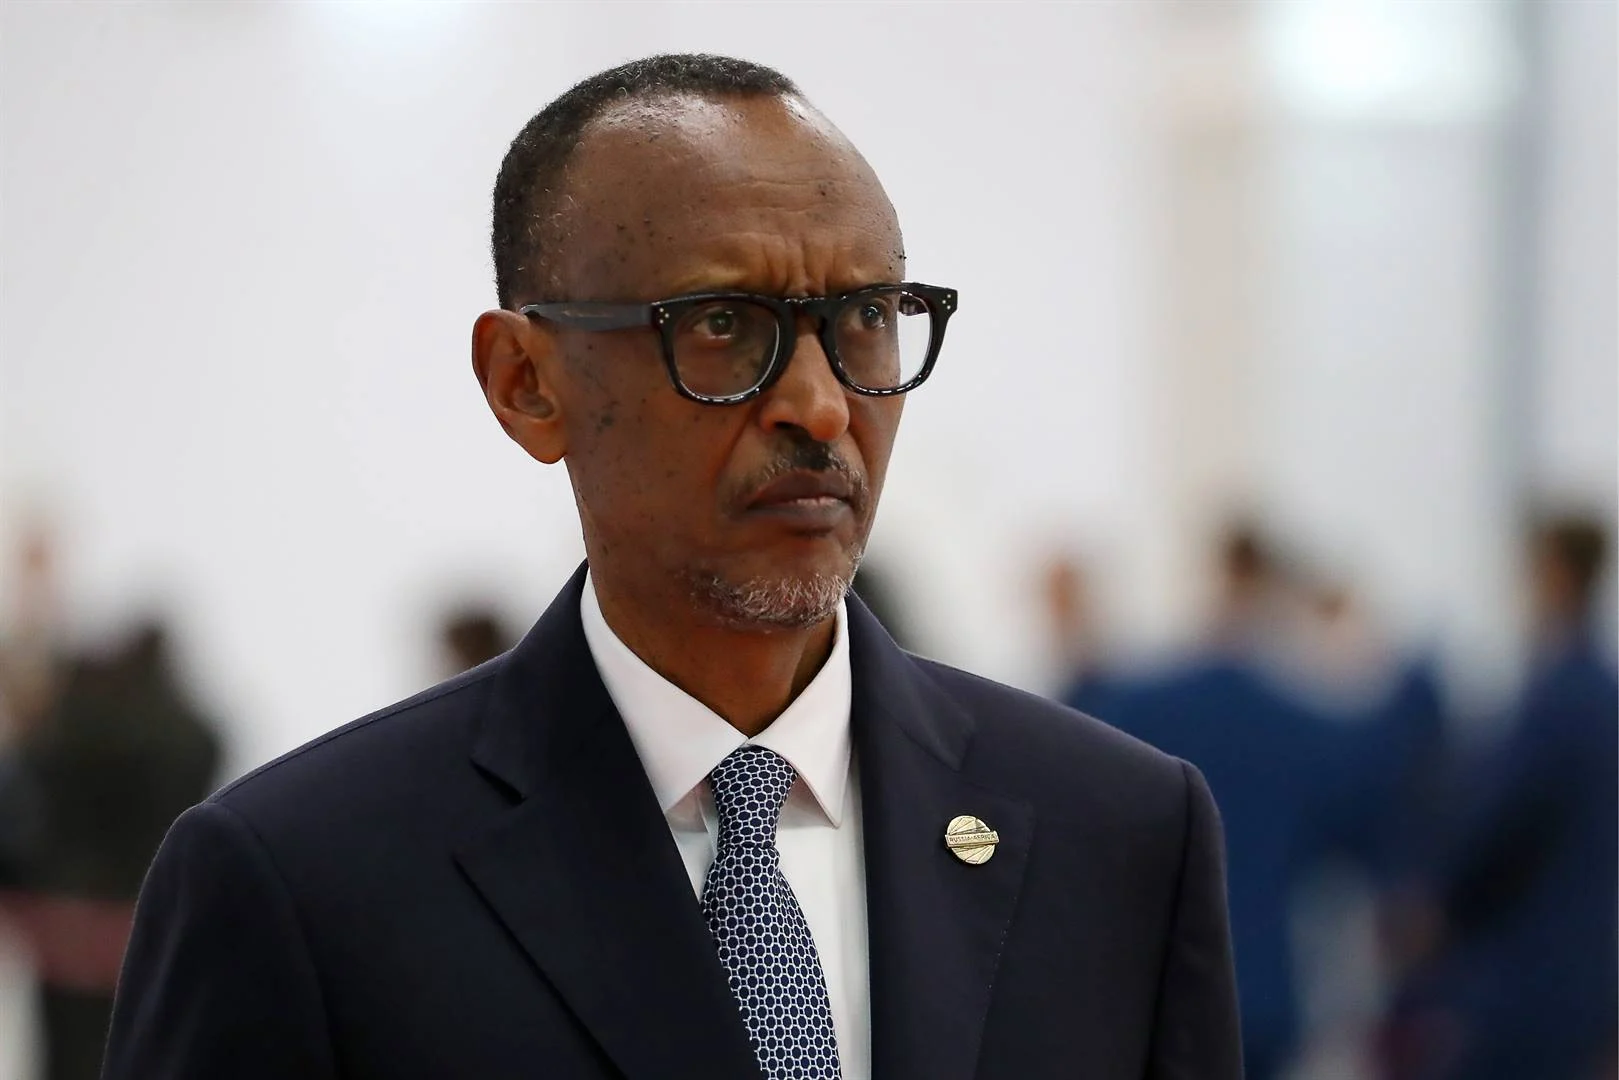 Freedom Of Speech Is Still An Issue In Rwanda, Human Rights Watch